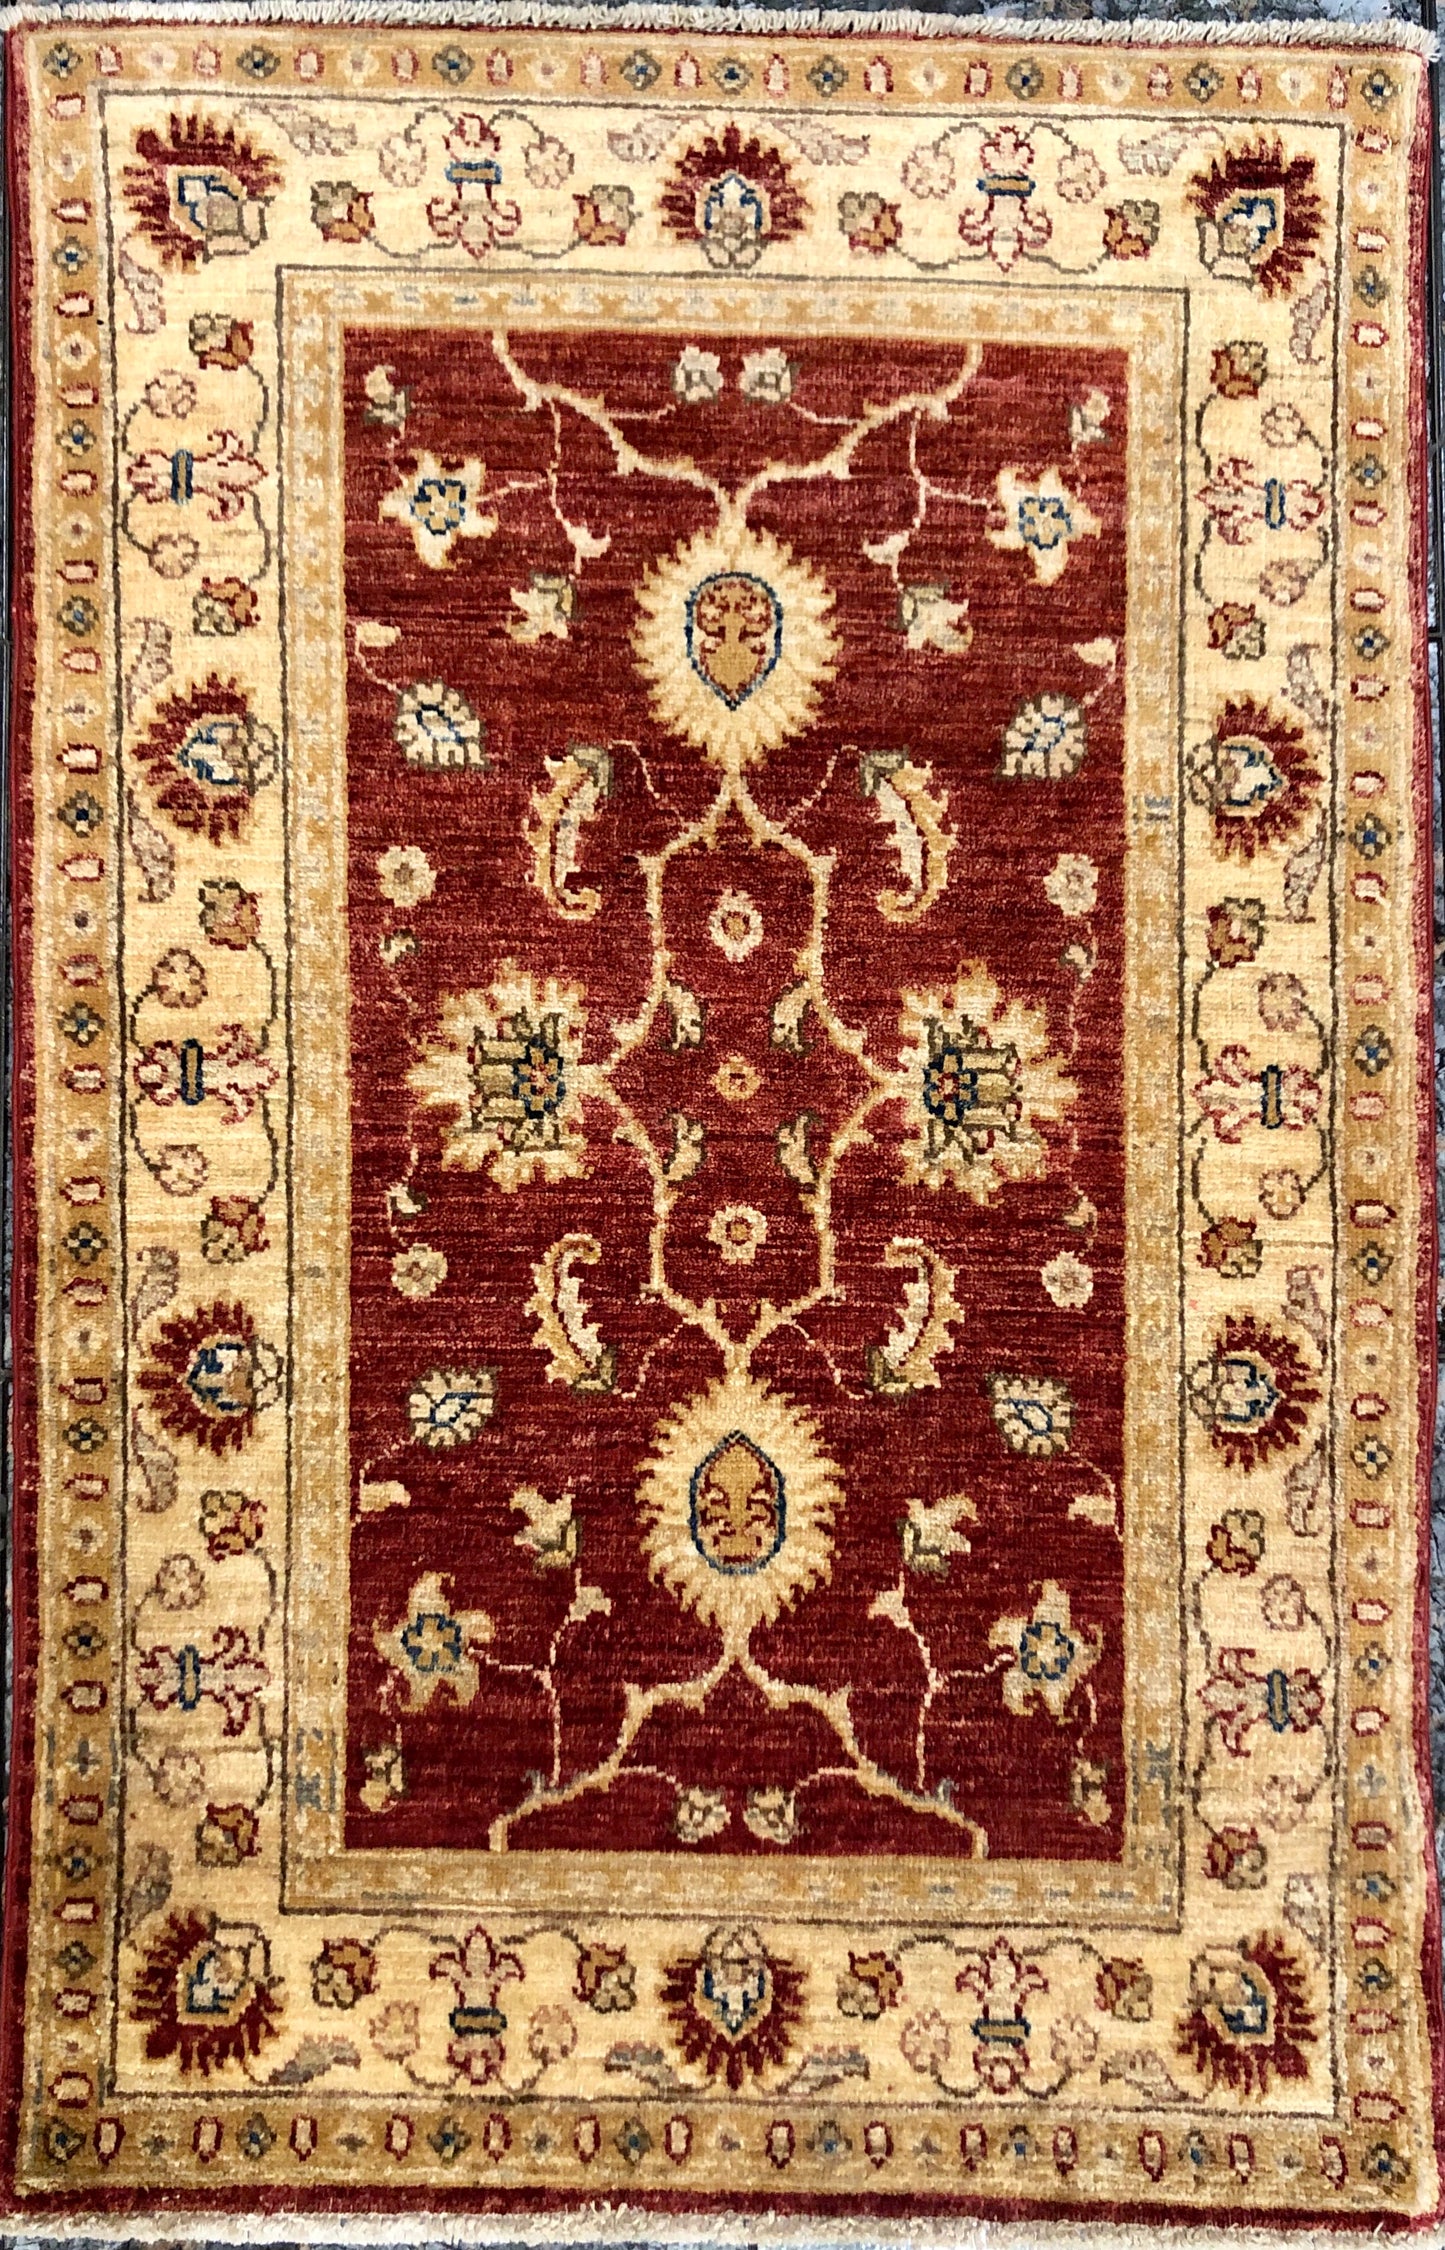 Iranian Ziegler Wool Carpet.